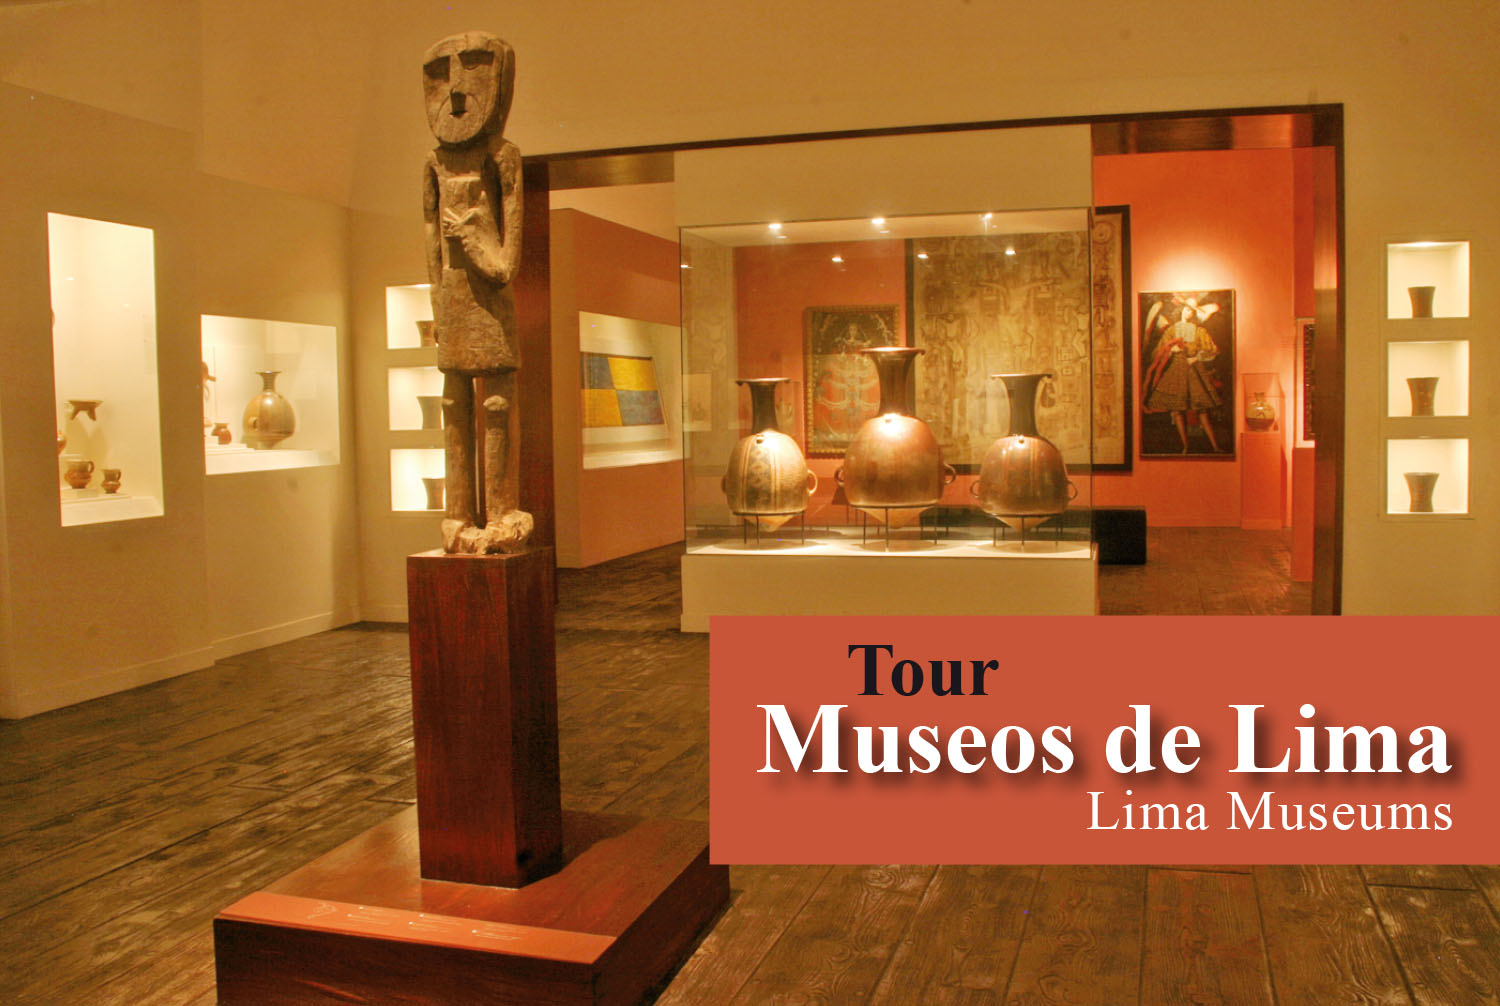 Tour Museos de Lima?a=1713403842